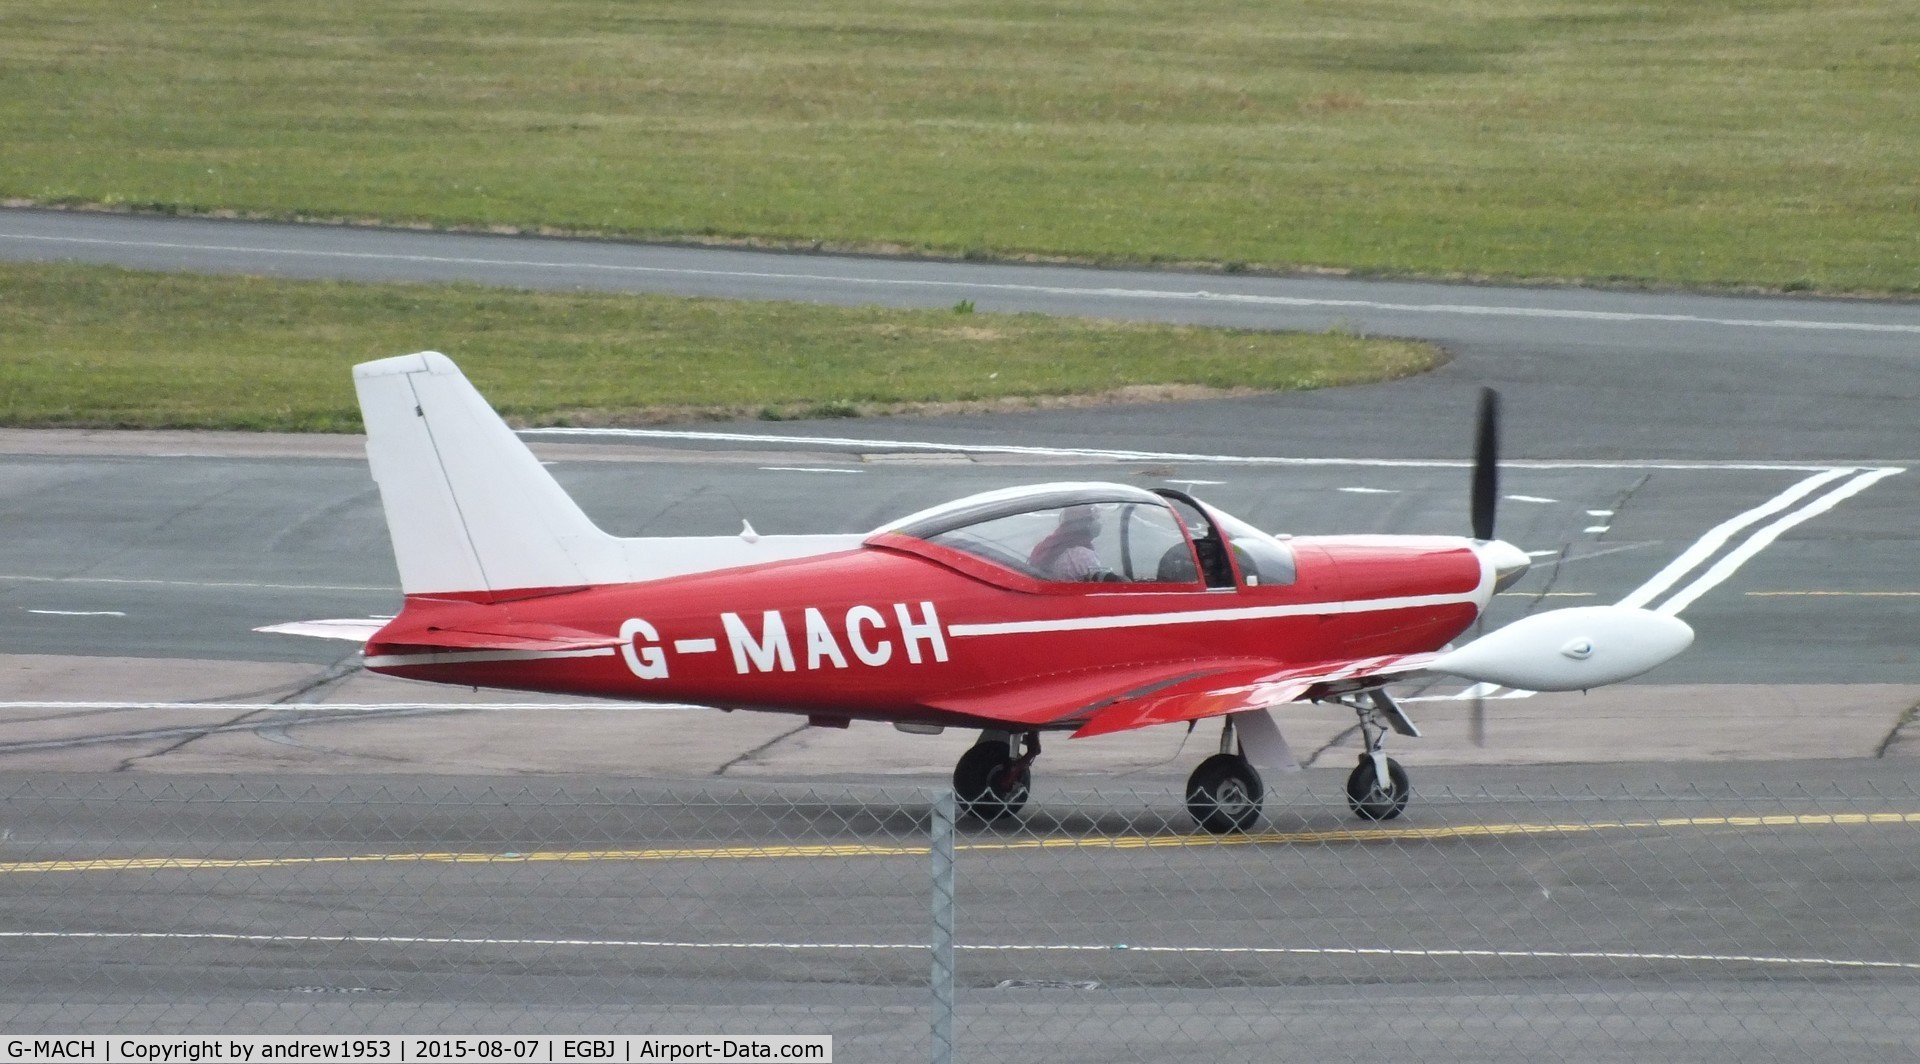 G-MACH, 1968 SIAI-Marchetti F-260 C/N 114, G-MACH at Gloucestershire Airport.